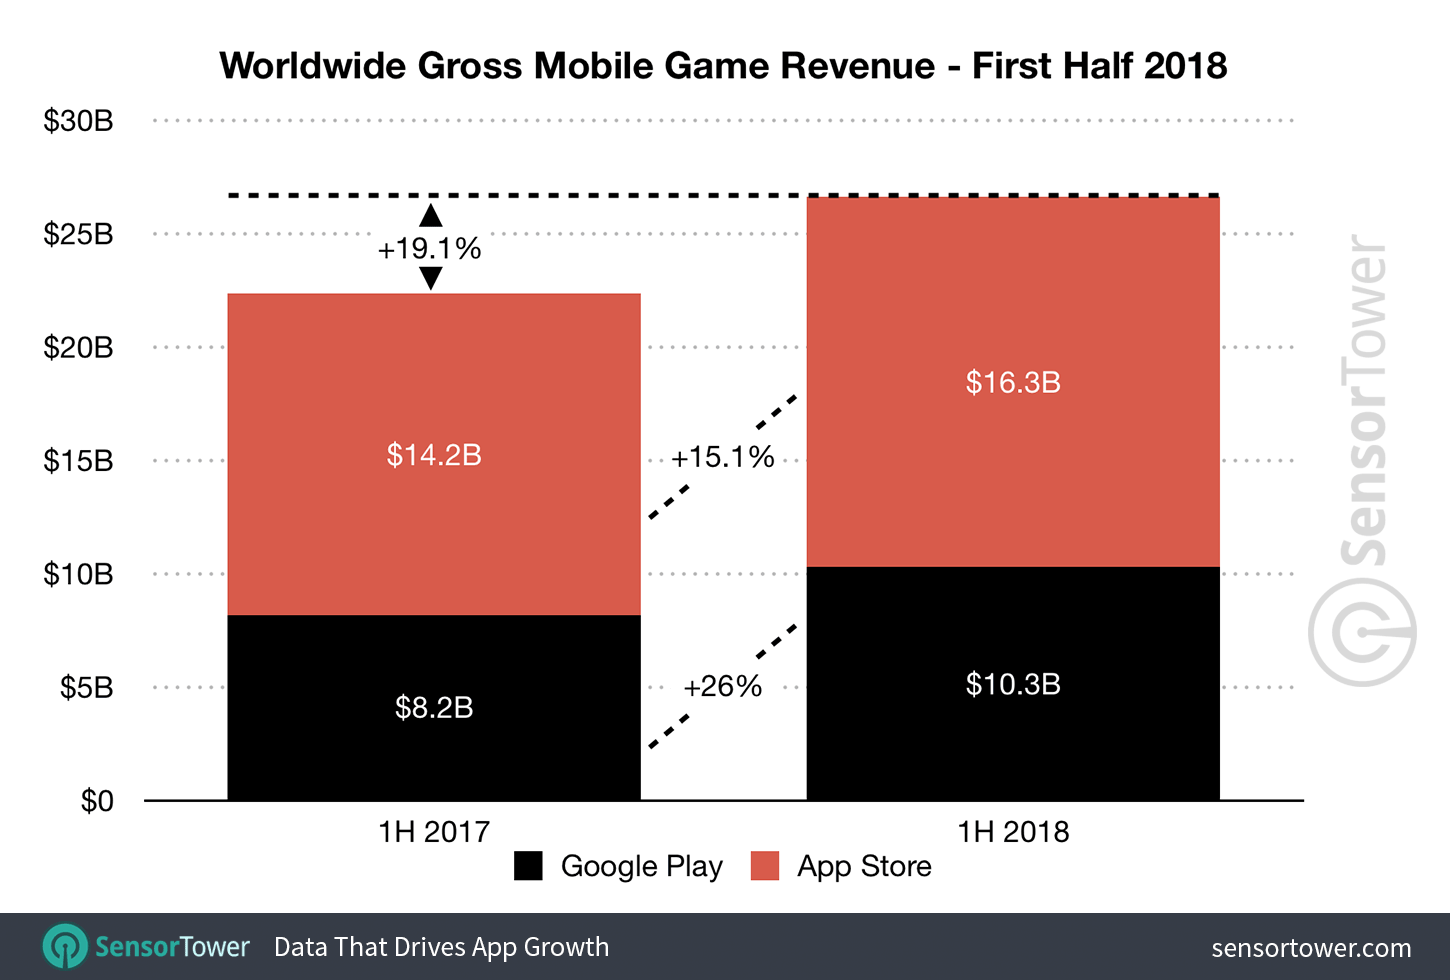 App Storeがgoogle Playより2倍以上の収益 しかしダウンロード数は半分以下という分析結果が発表 Engadget 日本版